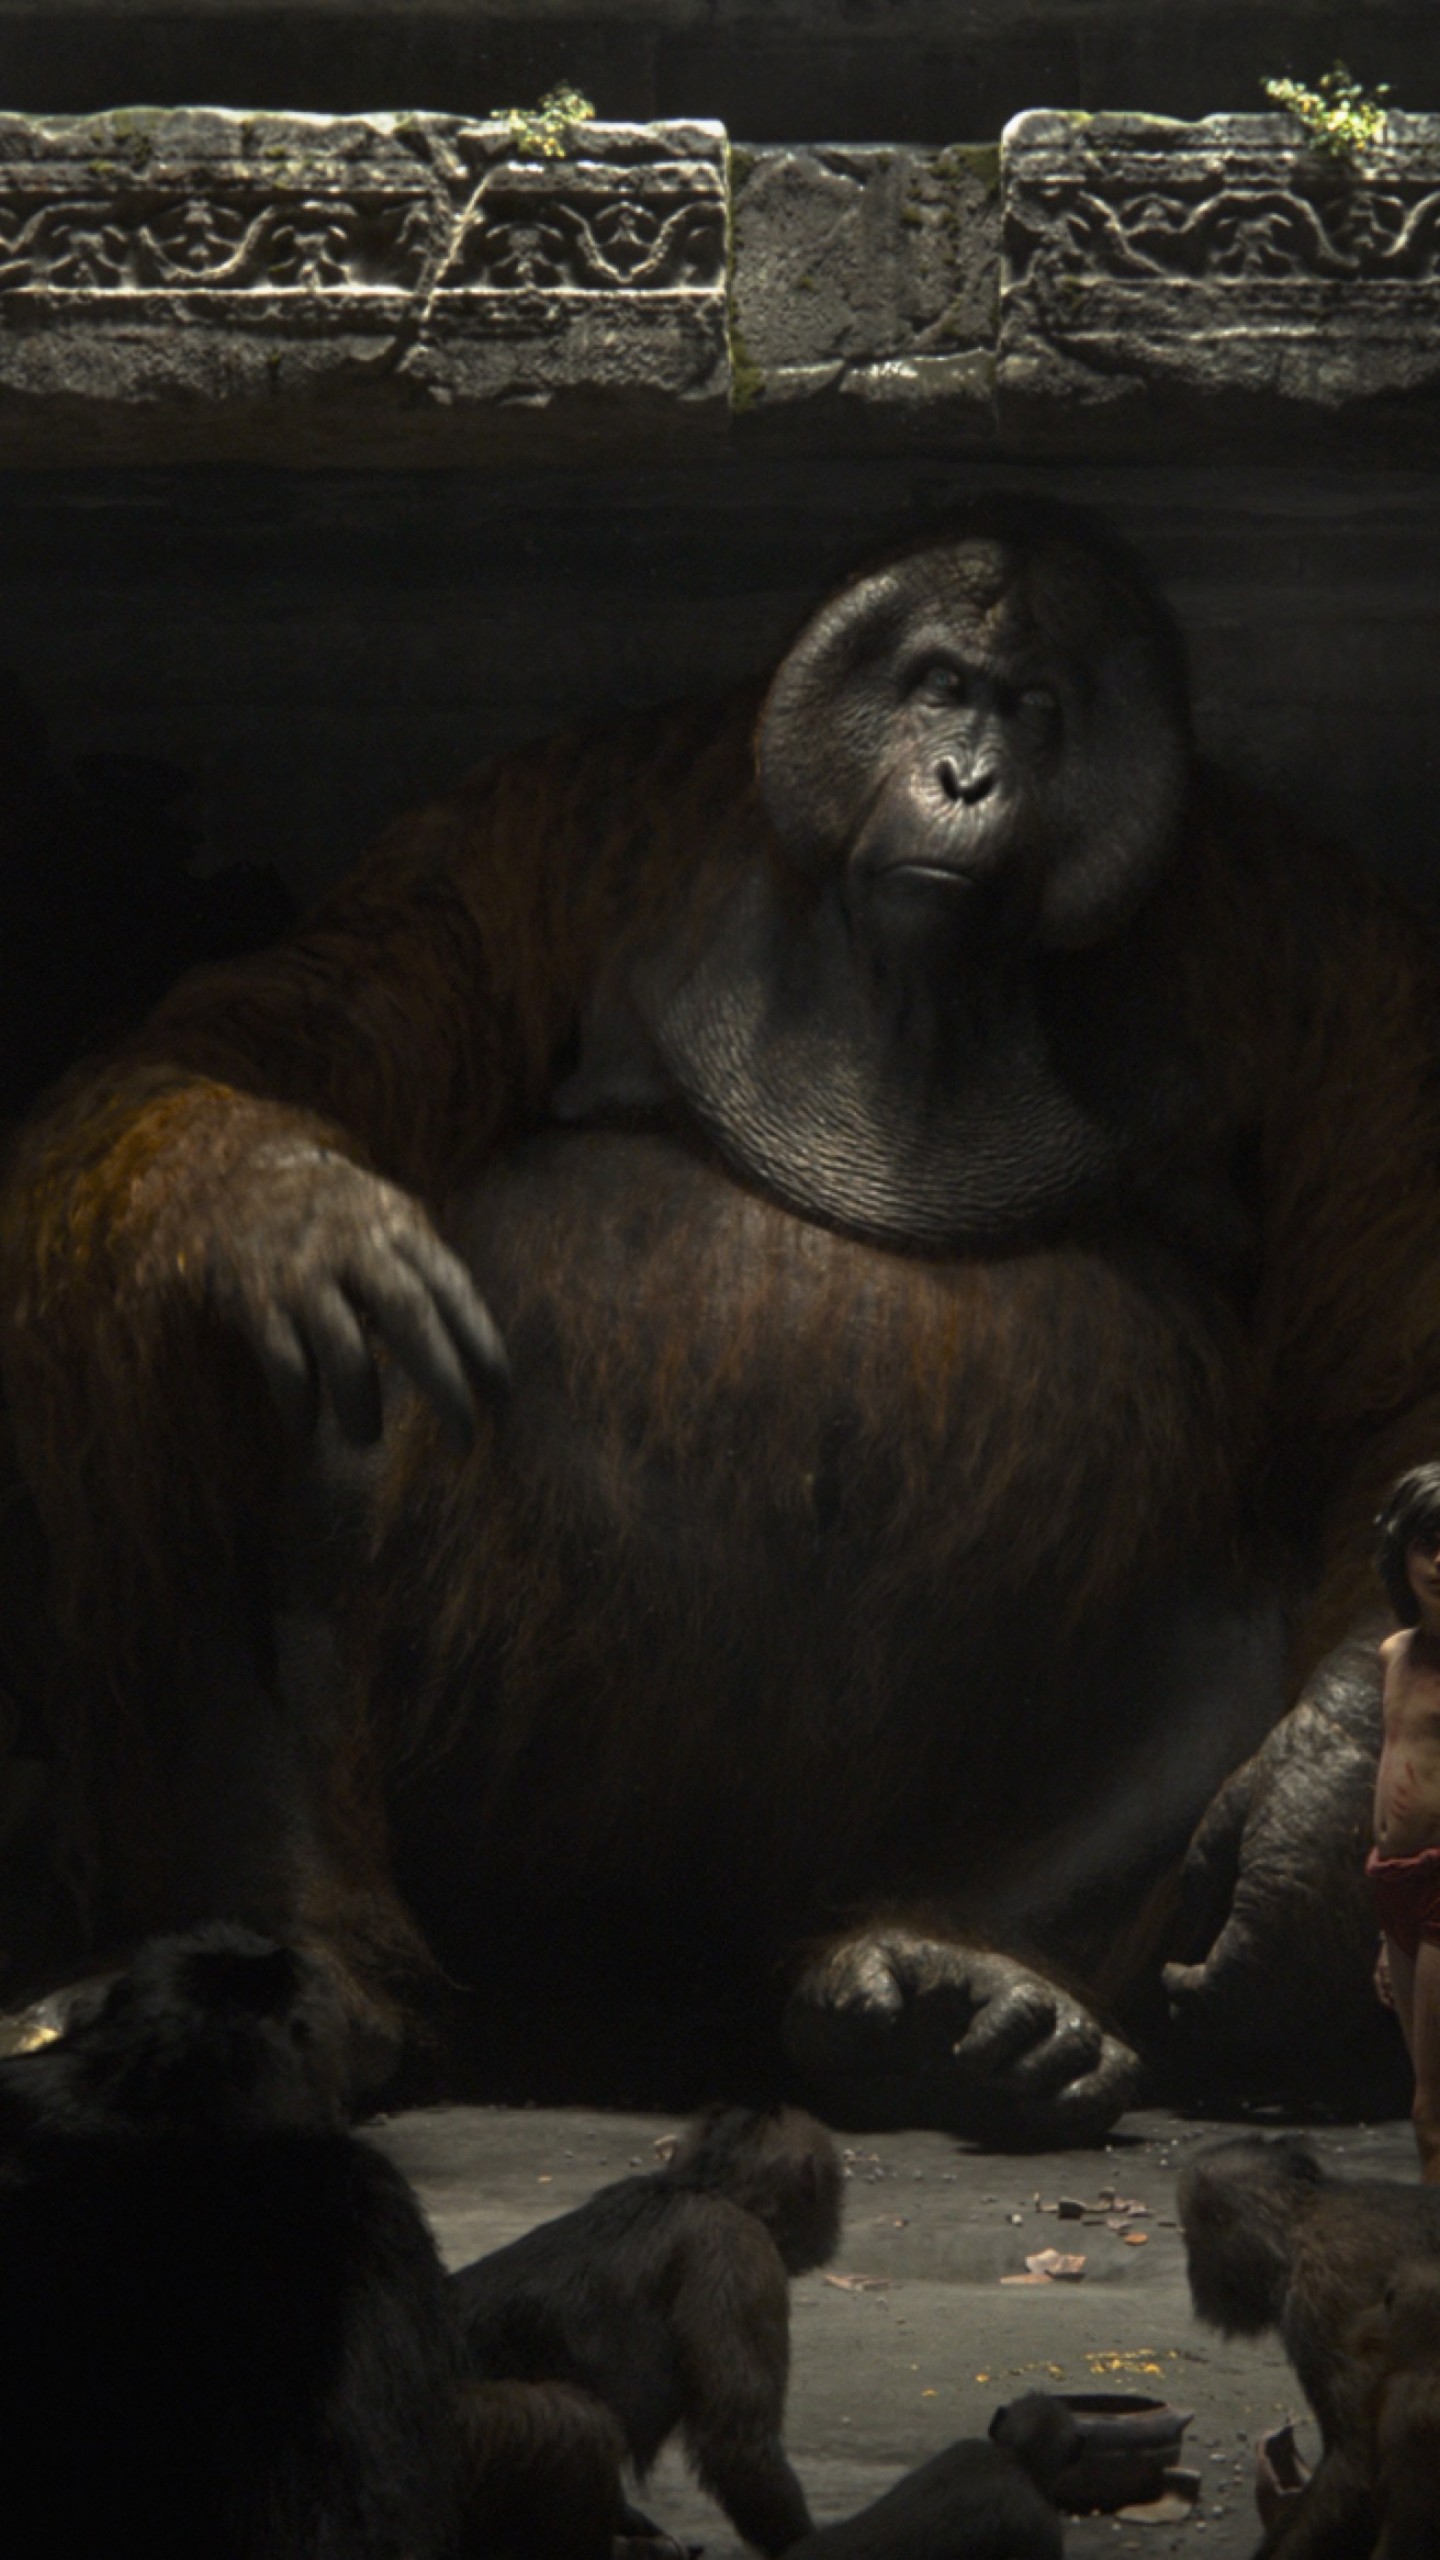 Jungle Book Movie Monkey - HD Wallpaper 